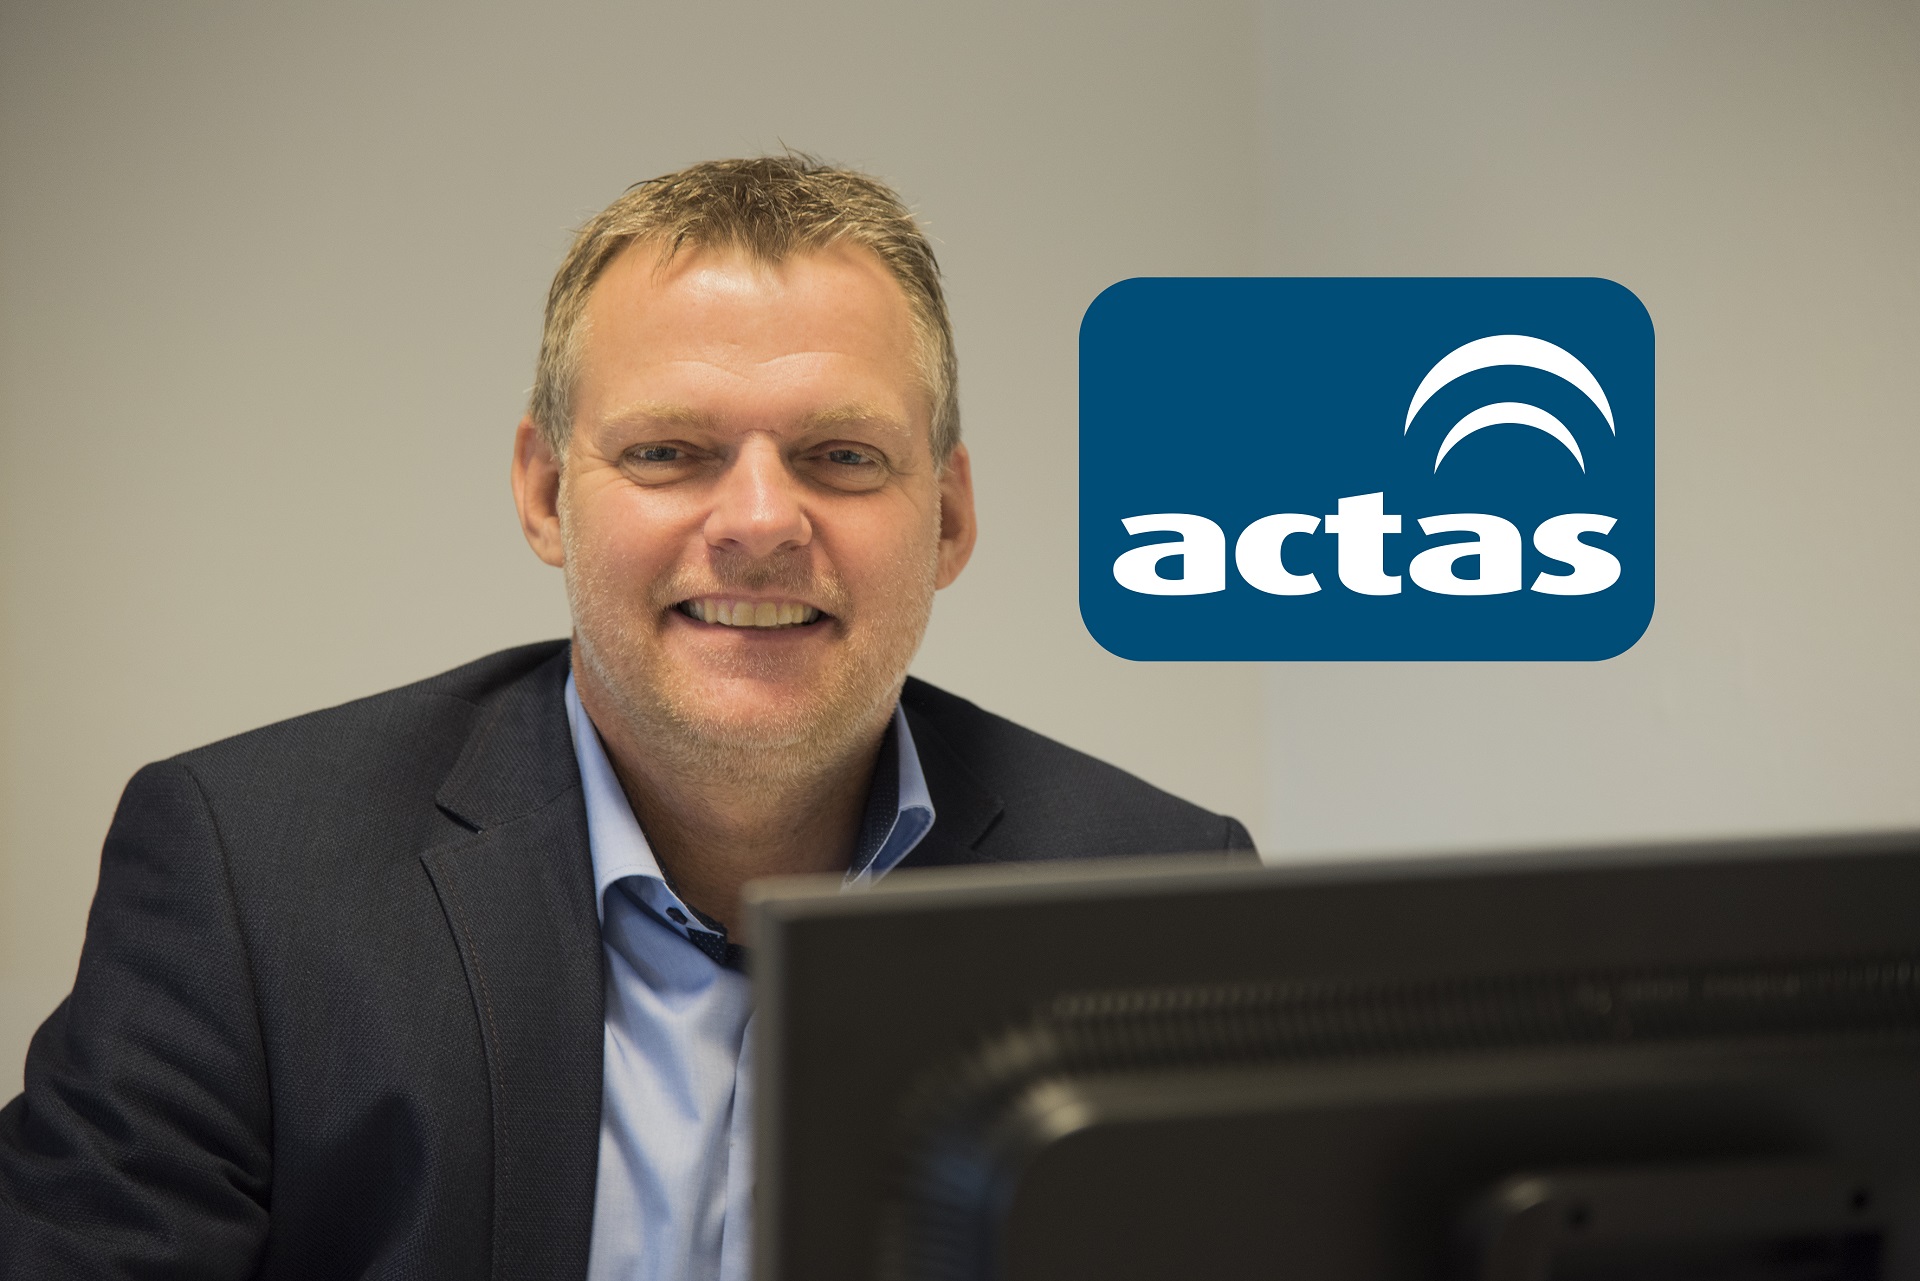 Actas' administrerende direktør Jørgen B. Kronborg er stolt over elite-certificeringen.